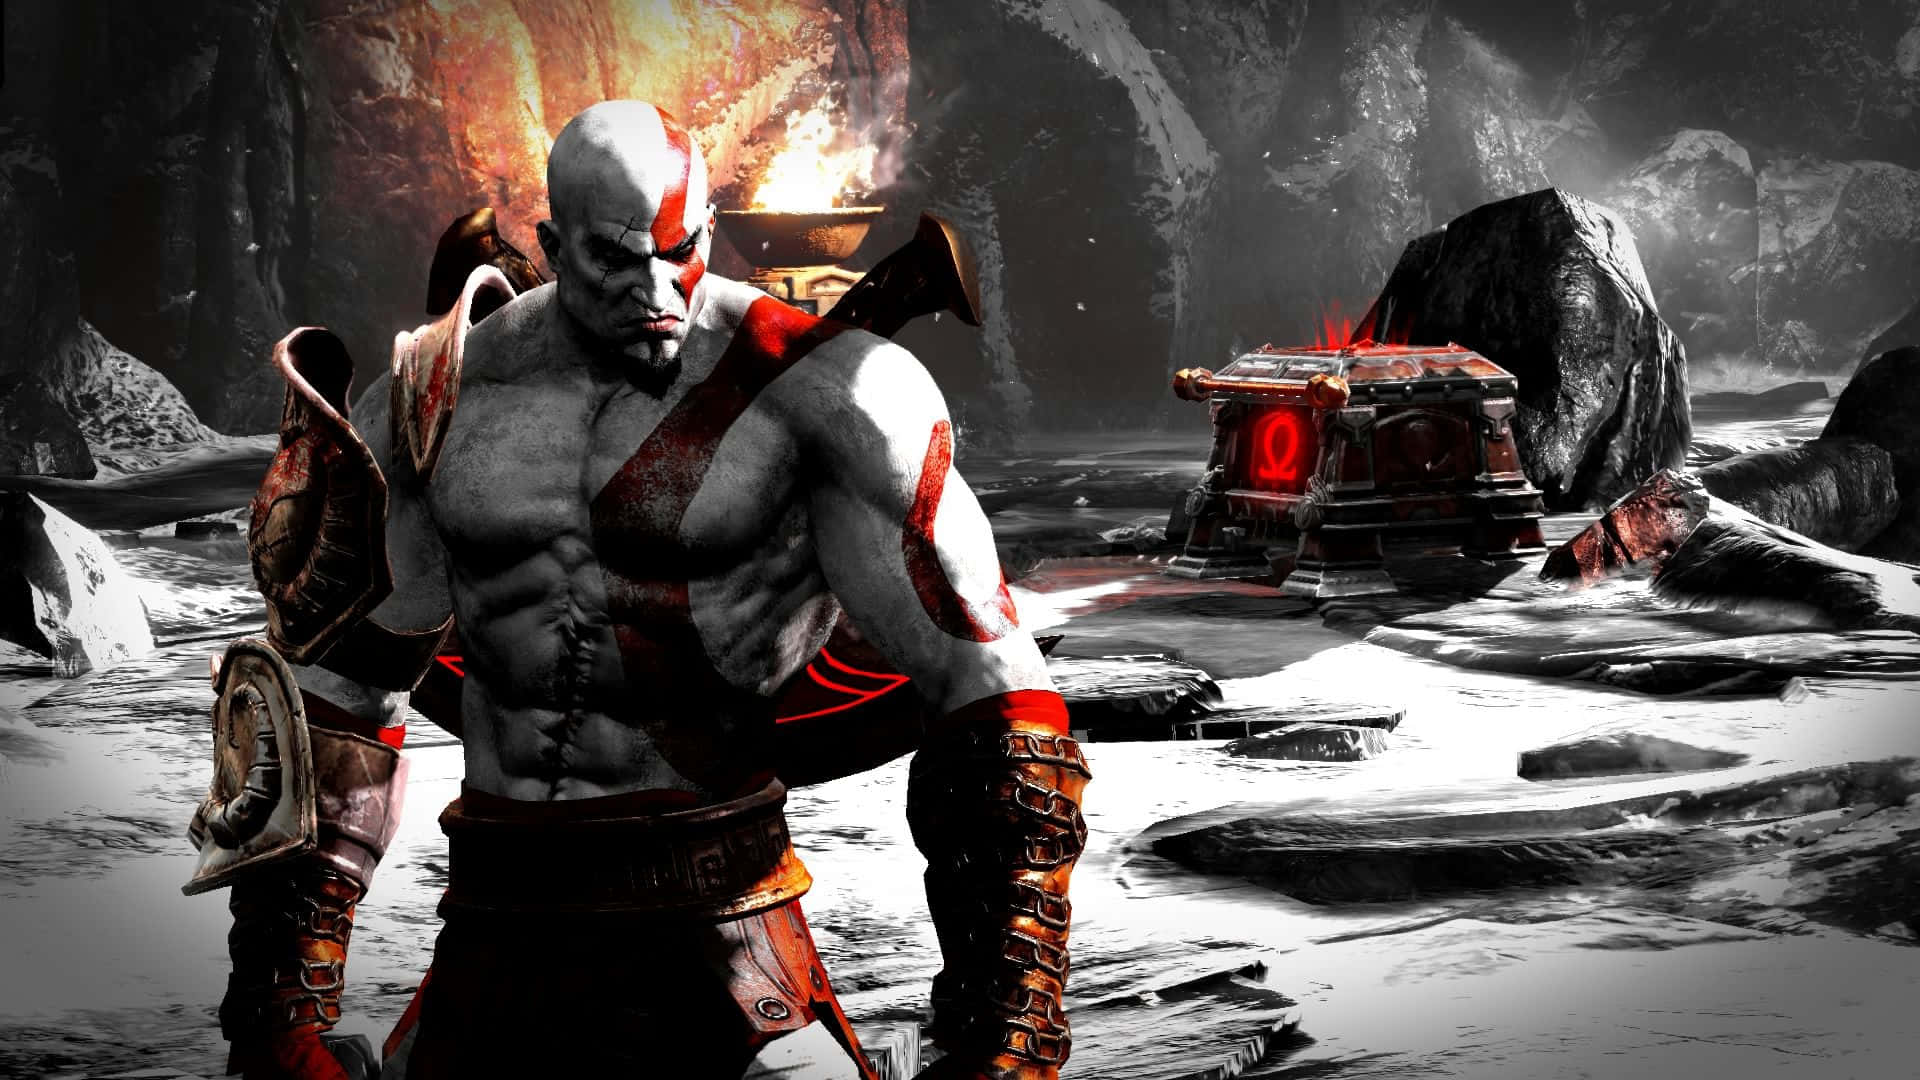 The legendary Kratos, unleashed in God of War 3. Wallpaper